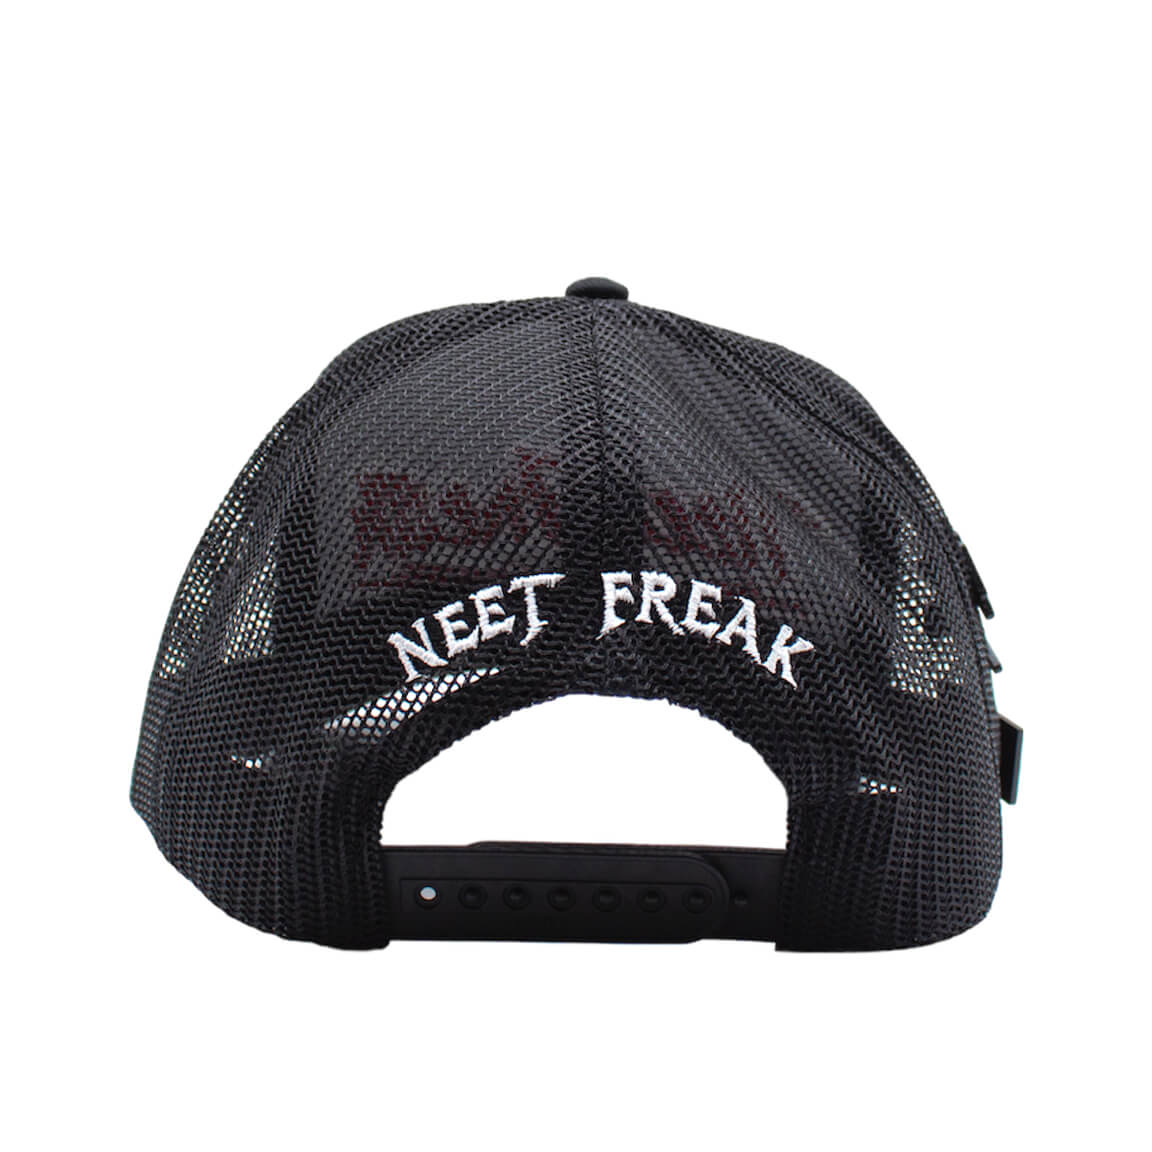 Black mesh trucker hat